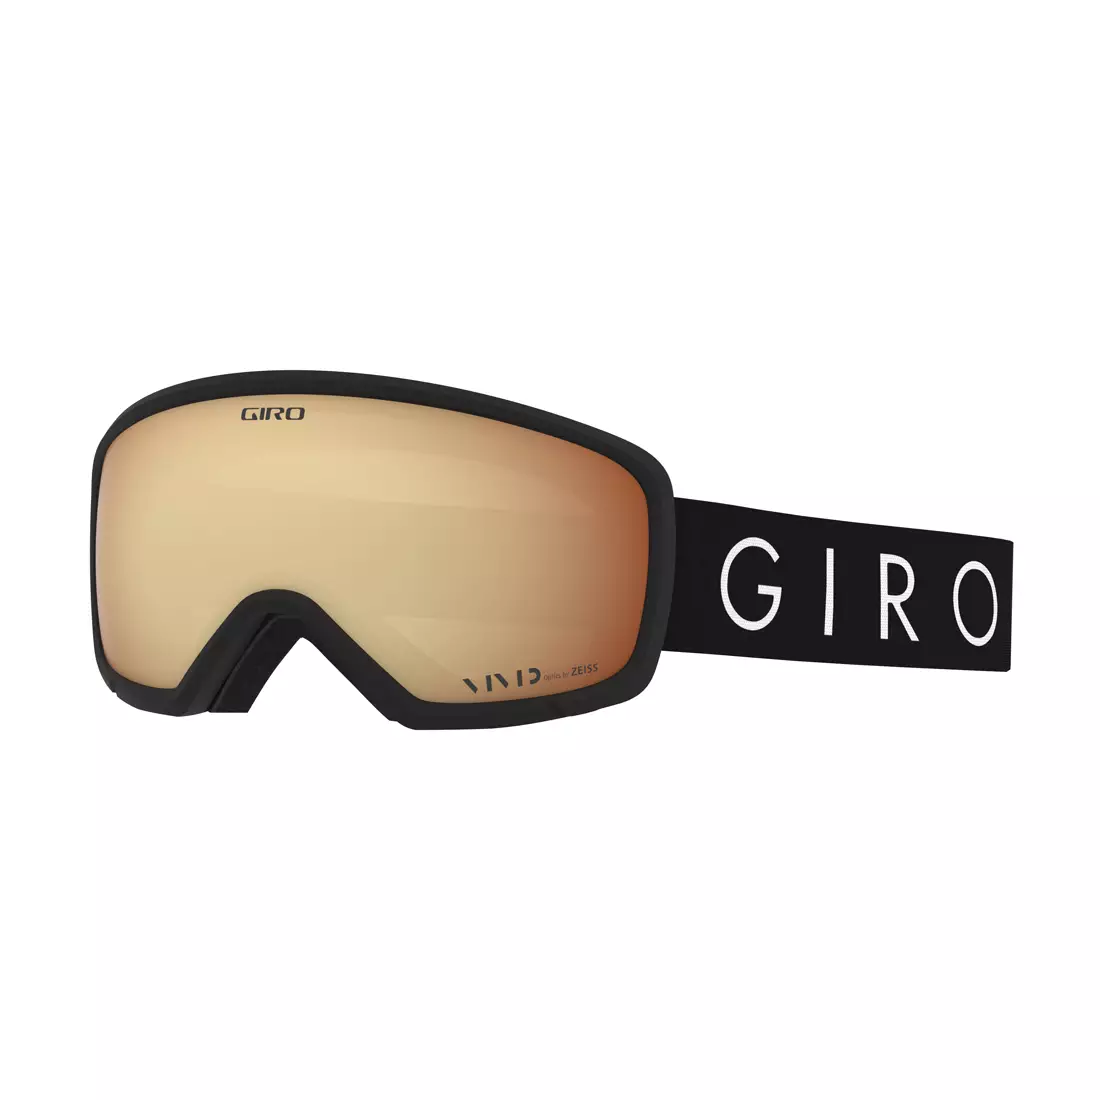 GIRO dámske zimné lyžiarske/snowboardové okuliare millie black core light (VIVID COPPER 21% S2 zorník) GR-7119830